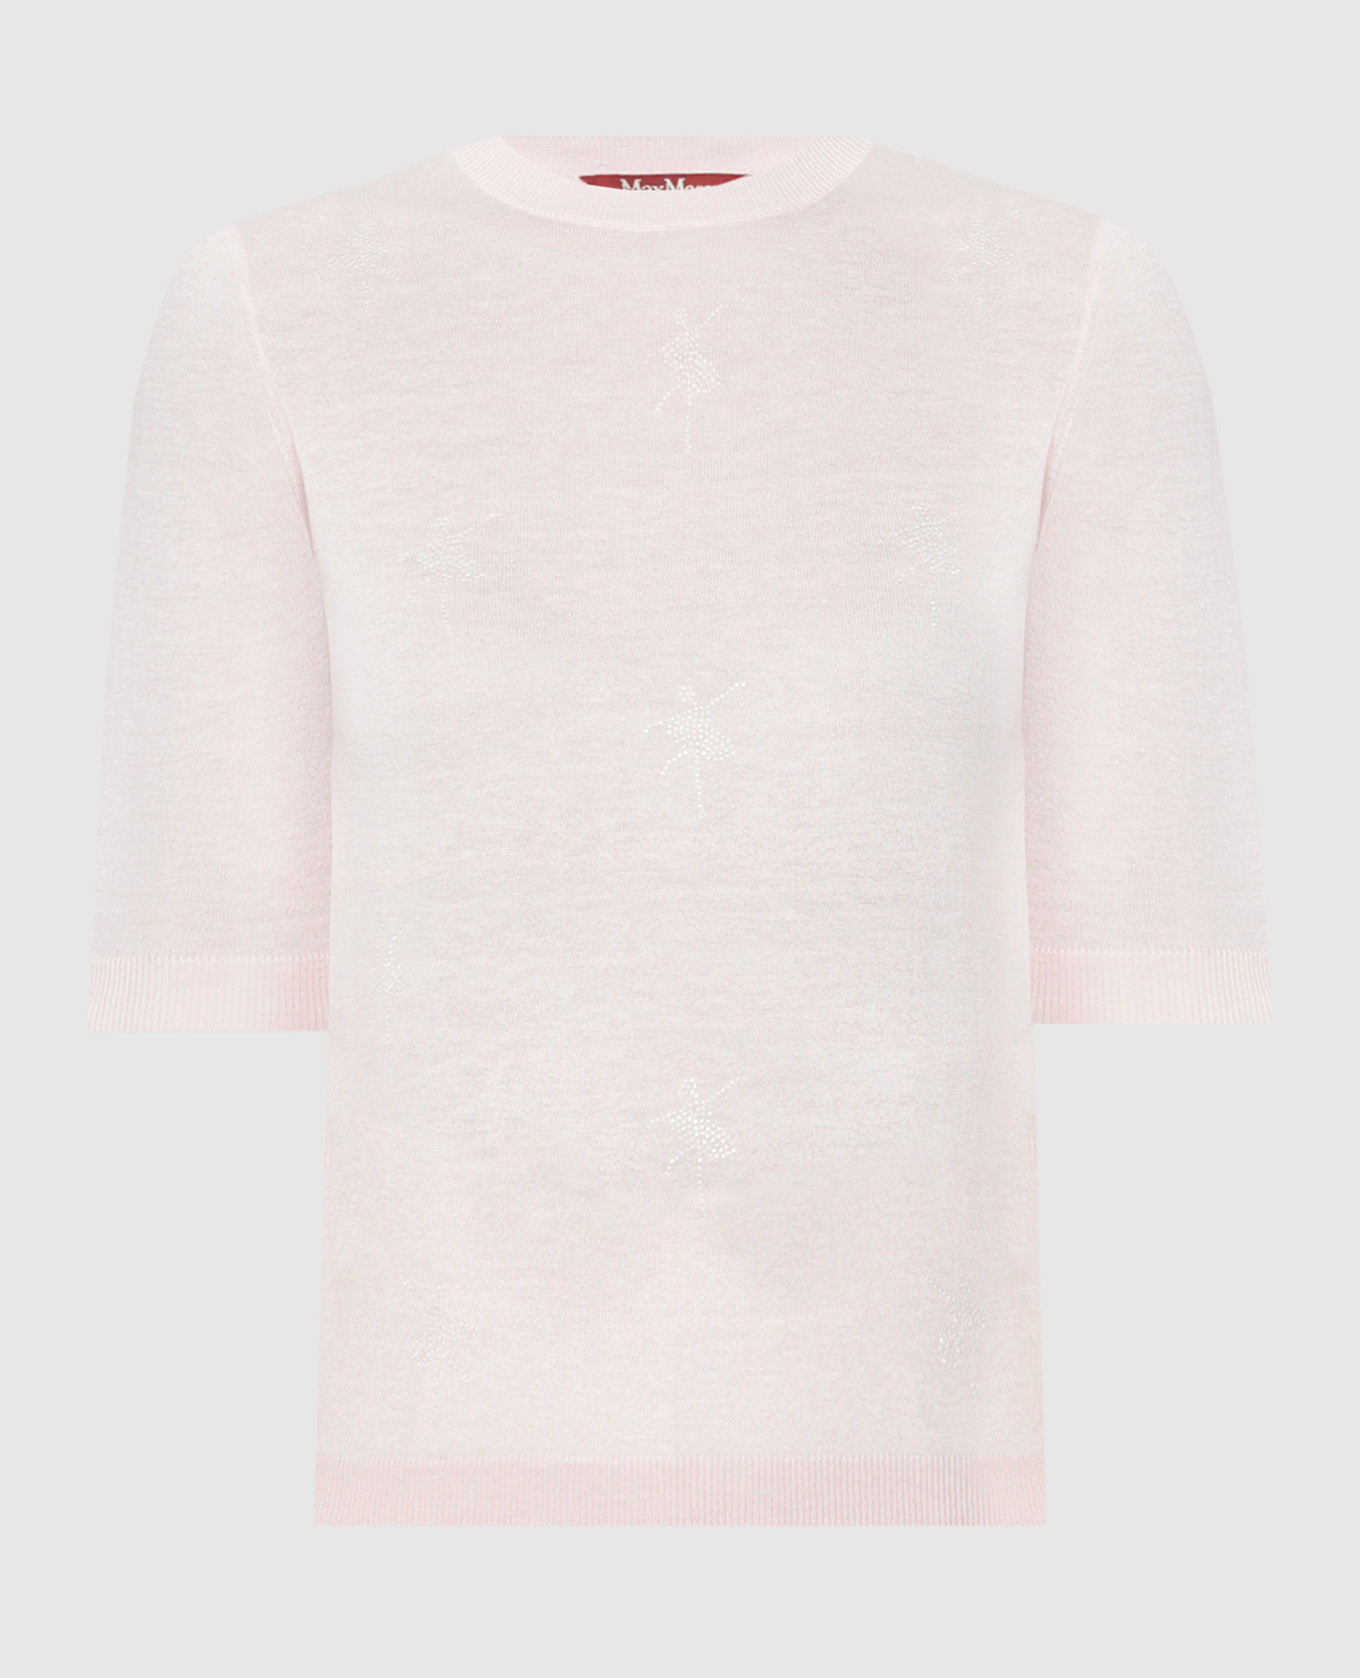 SAMUELE pink T-shirt made of silk and wool